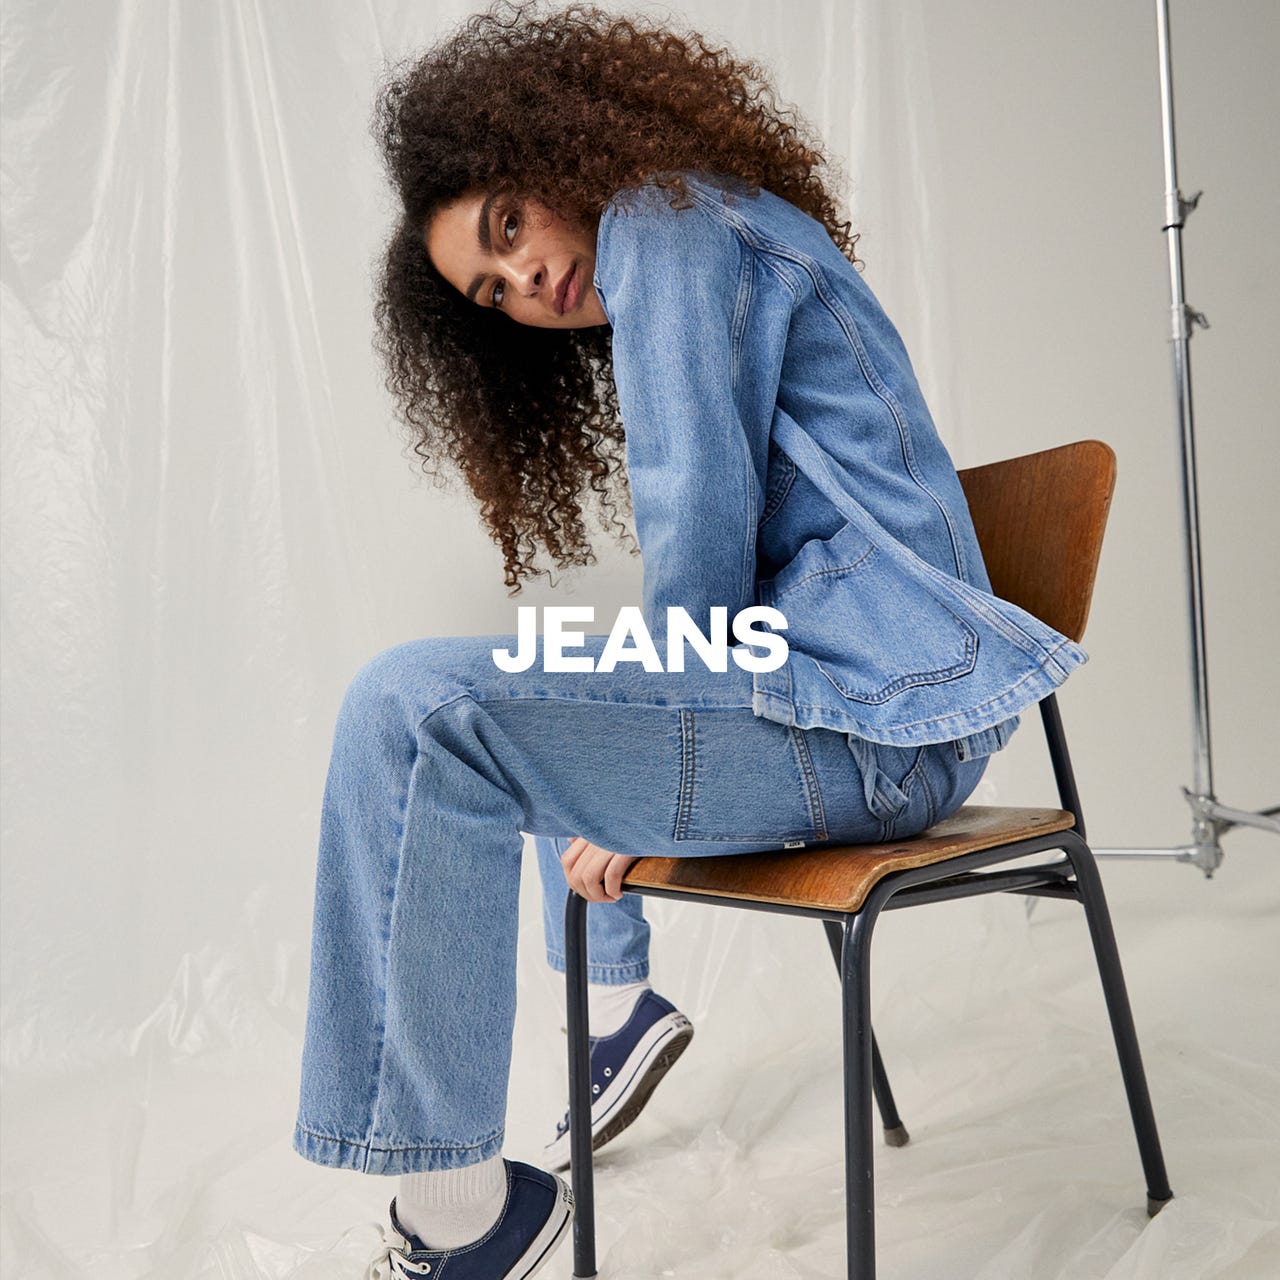 jjxx-jeans-dayz27-focus-row6-box2-de-at.jpg